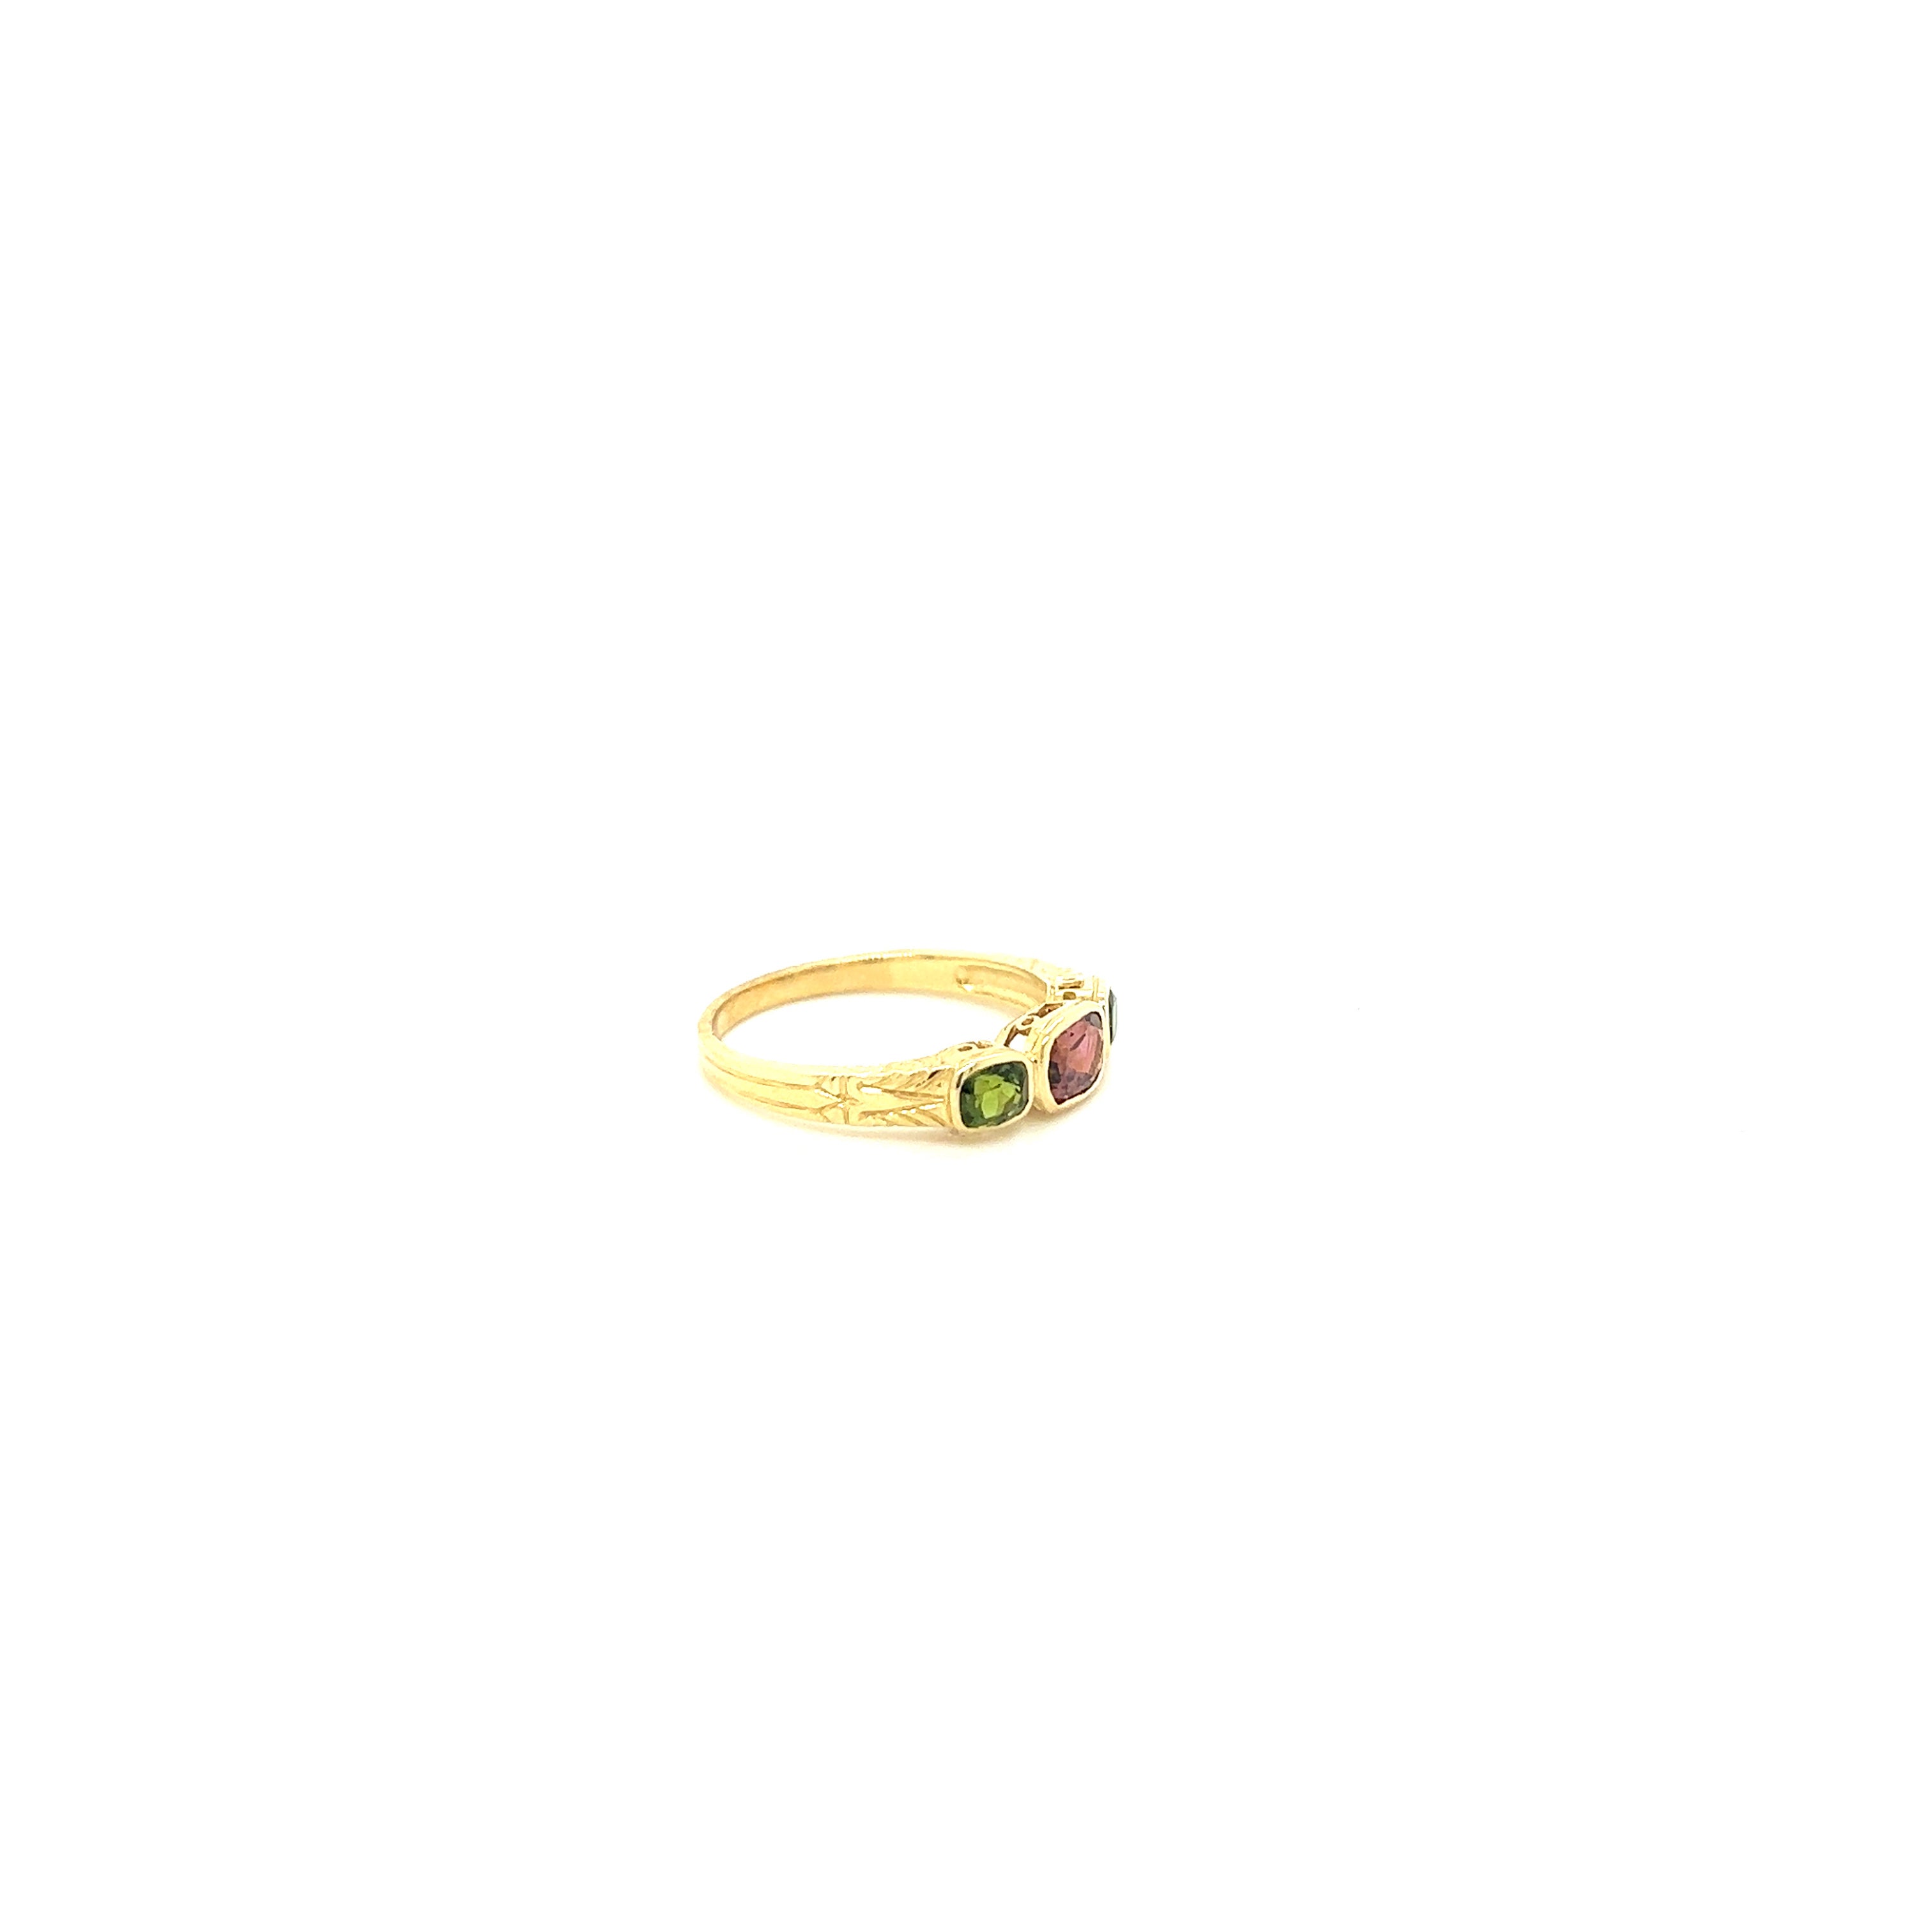 9ct yellow gold pink tourmaline and green tourmaline ring.